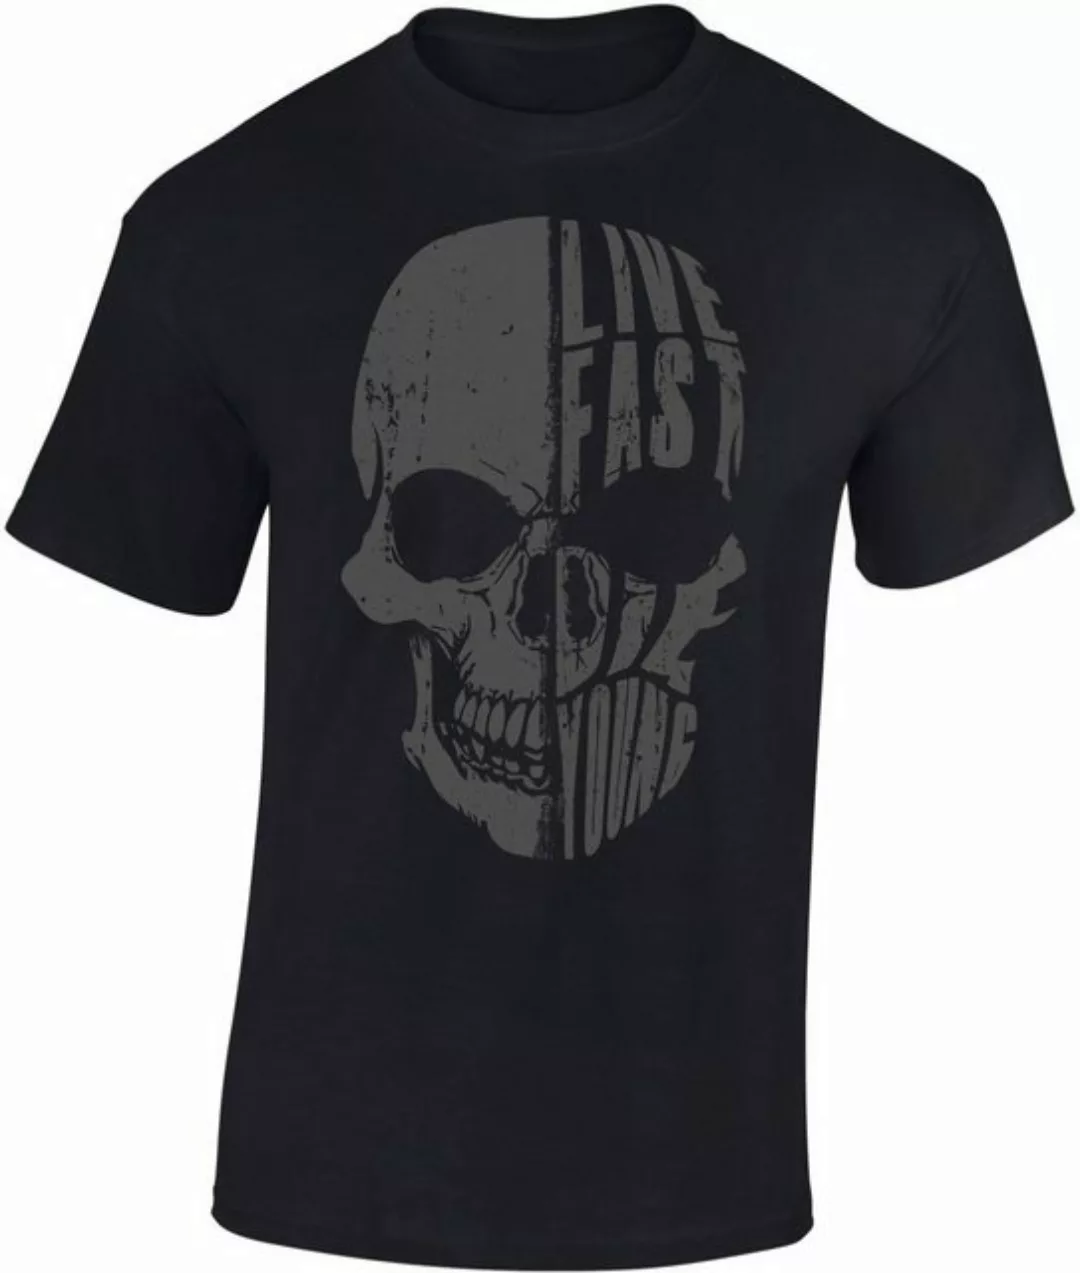 Baddery Print-Shirt Biker Shirt: "Live Fast Die Young" - Motorrad T-Shirt, günstig online kaufen